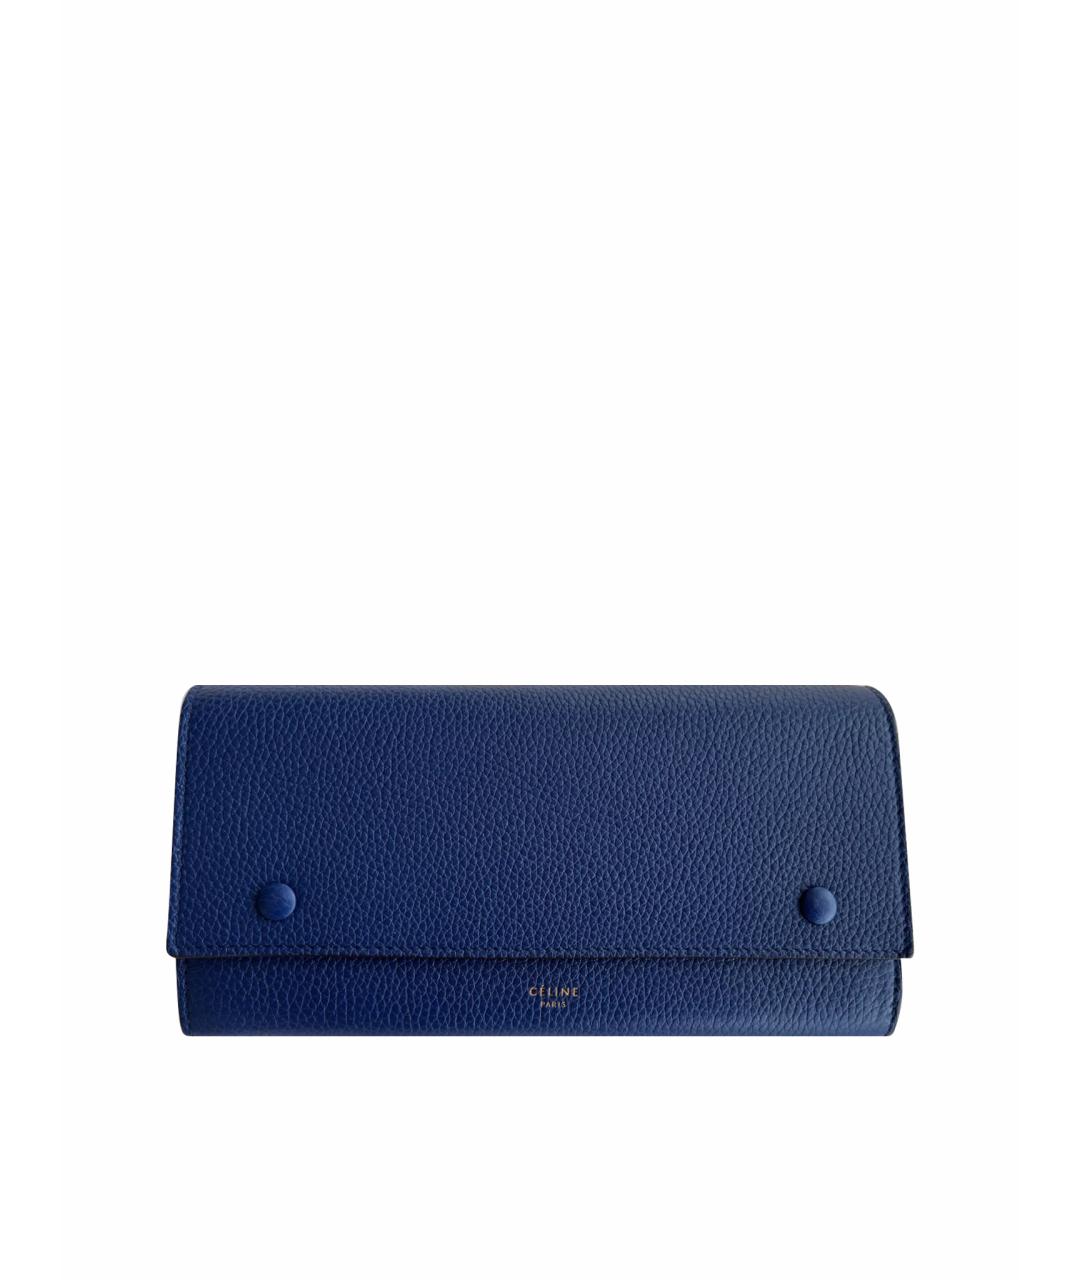 CELINE PRE-OWNED Синий кожаный кошелек, фото 1